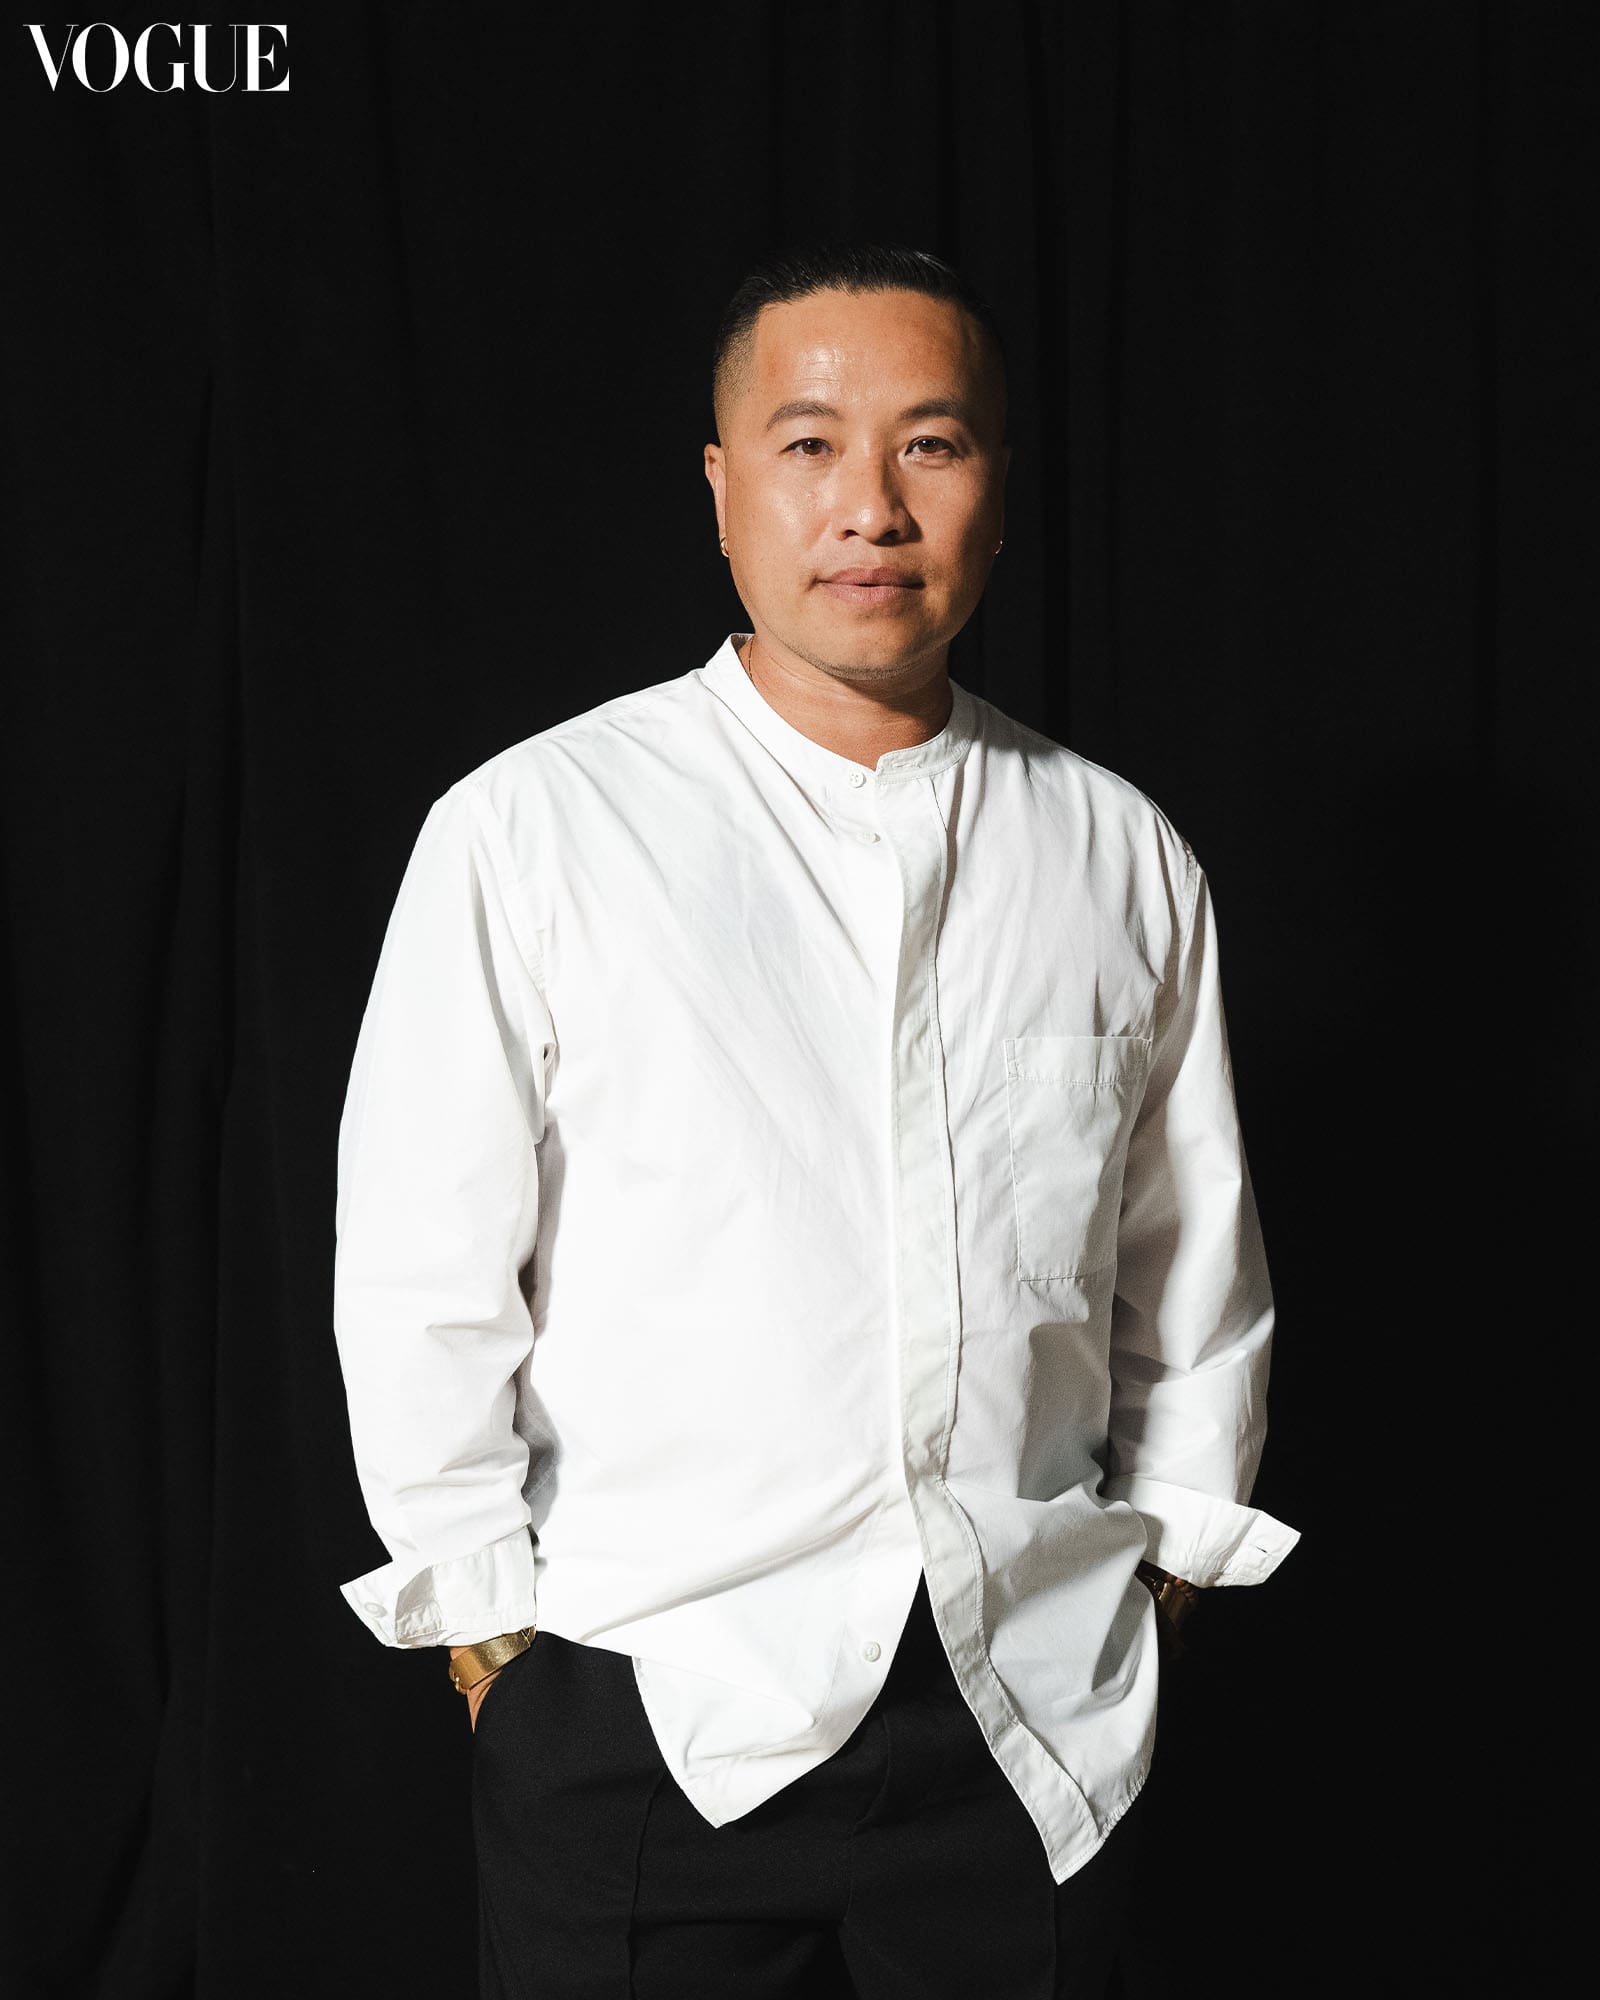 Philip Lim wearing a white button down shirt